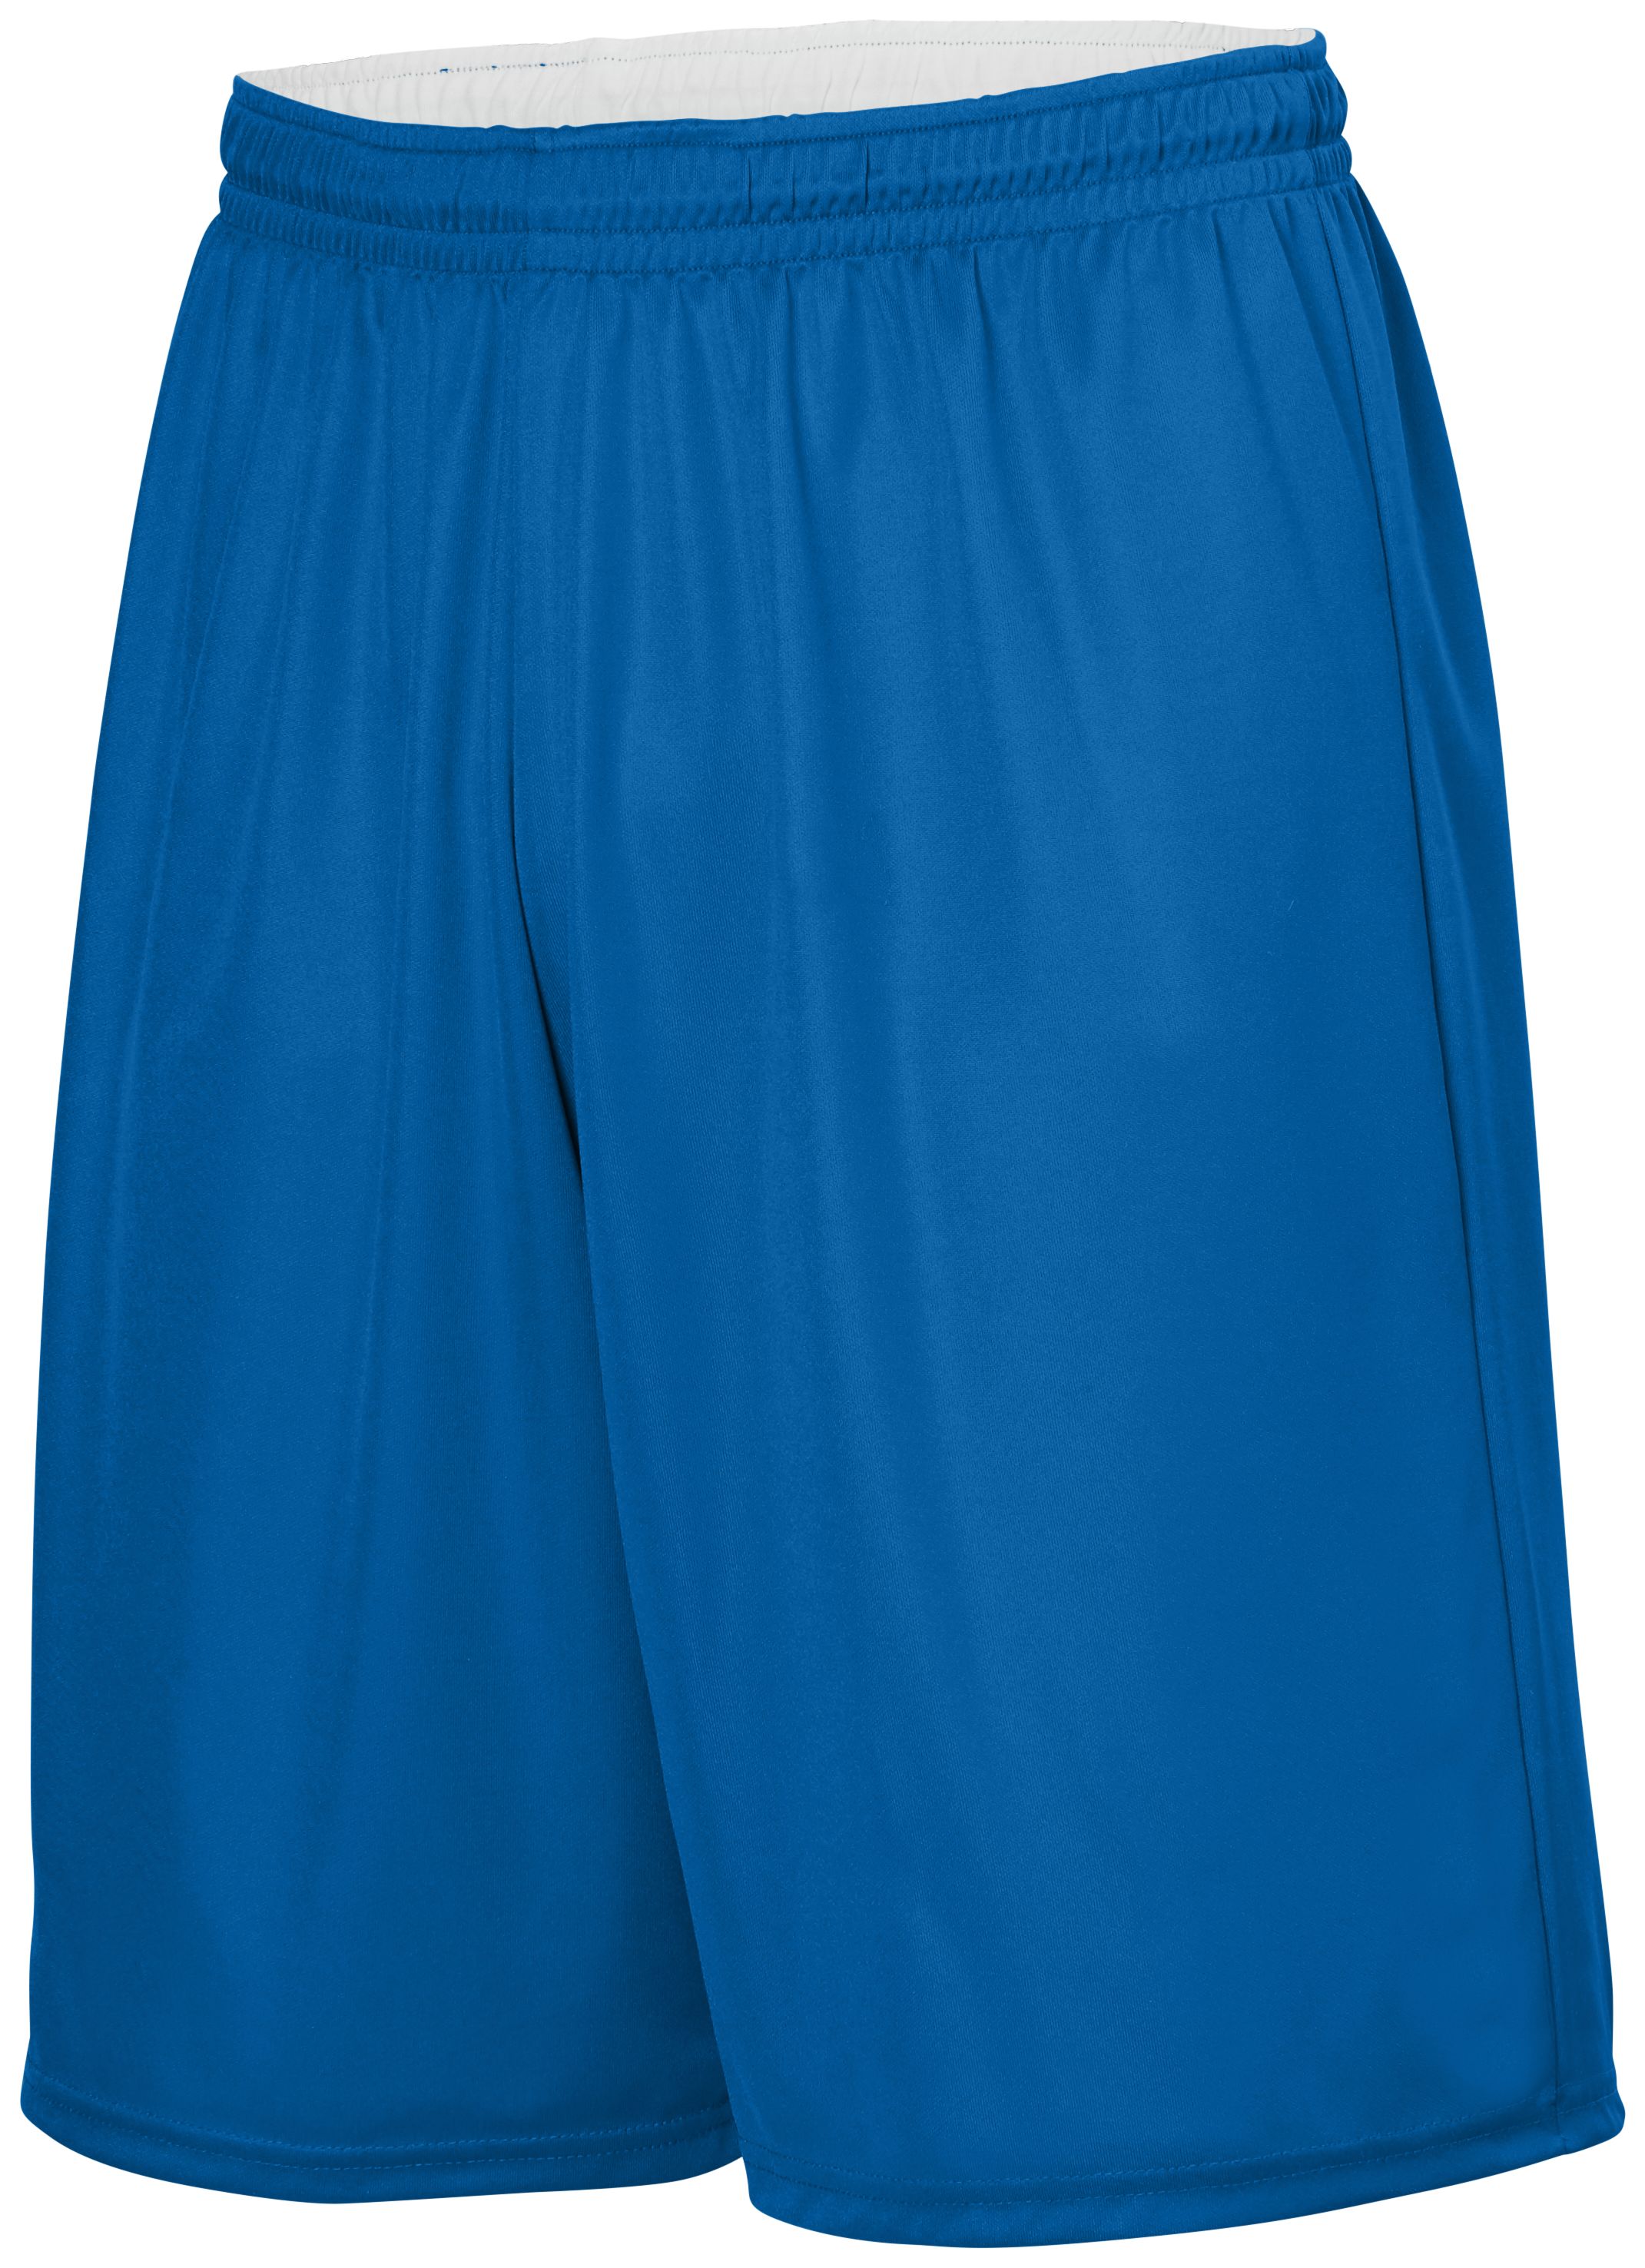 Augusta Sportswear 1407 - Youth Reversible Wicking Shorts